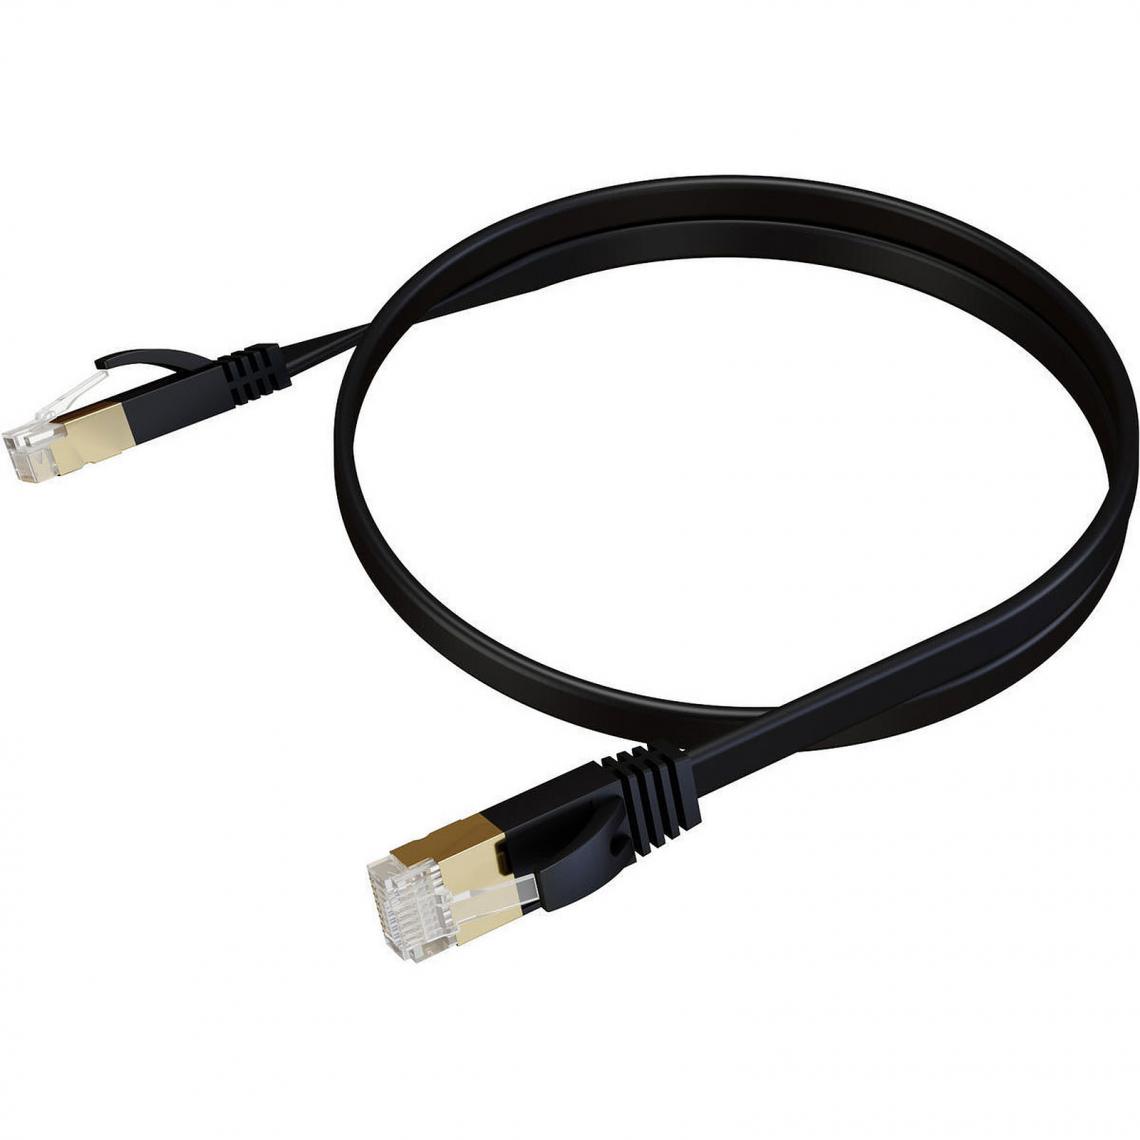 Real cable - E-NET 600-2 (1 m) - Câble antenne